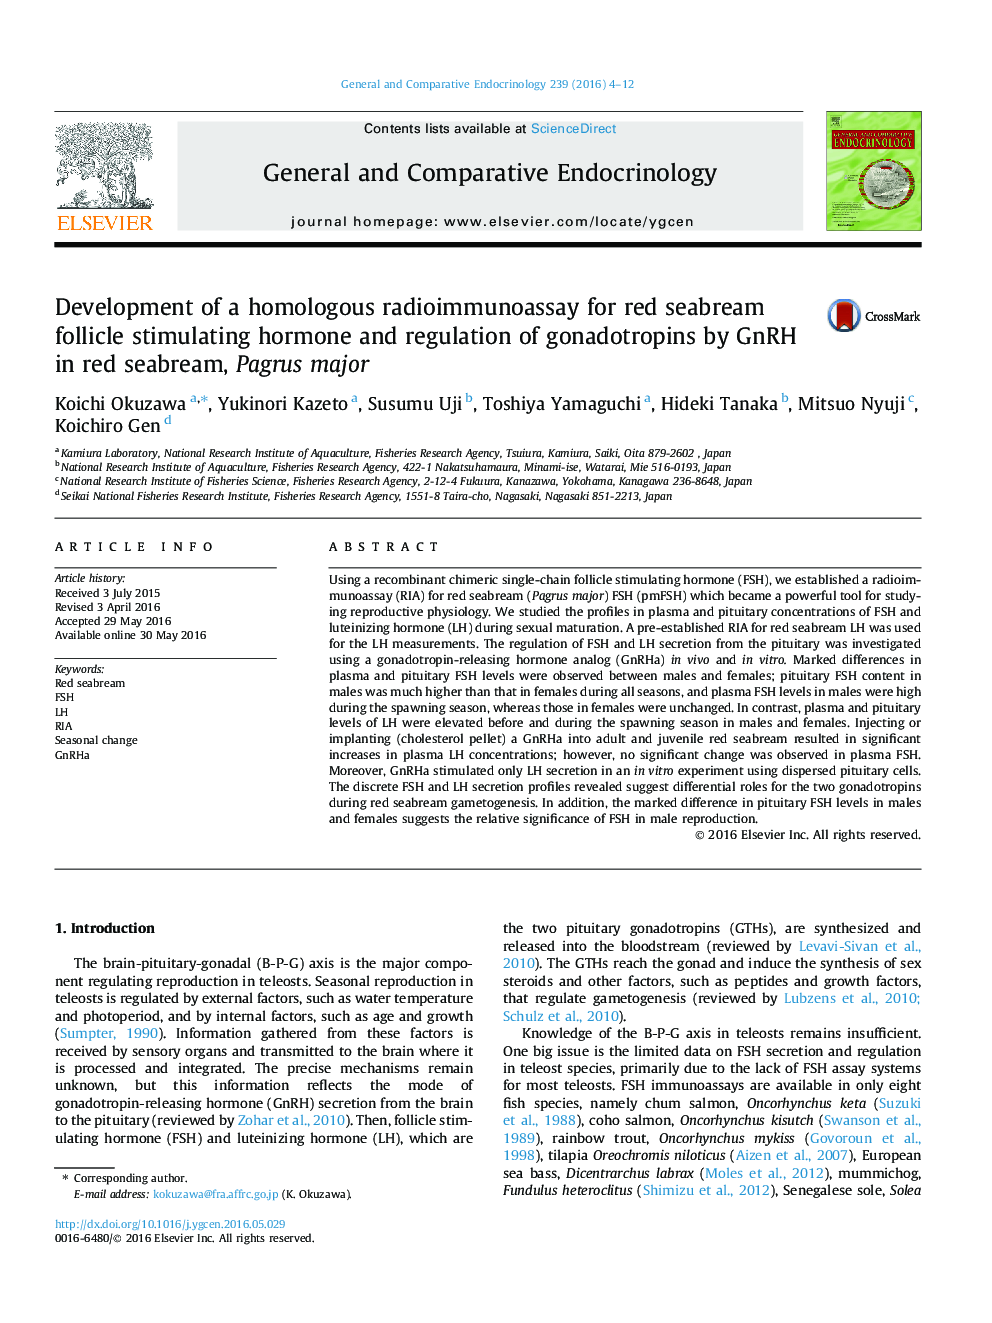 Development of a homologous radioimmunoassay for red seabream follicle stimulating hormone and regulation of gonadotropins by GnRH in red seabream, Pagrus major